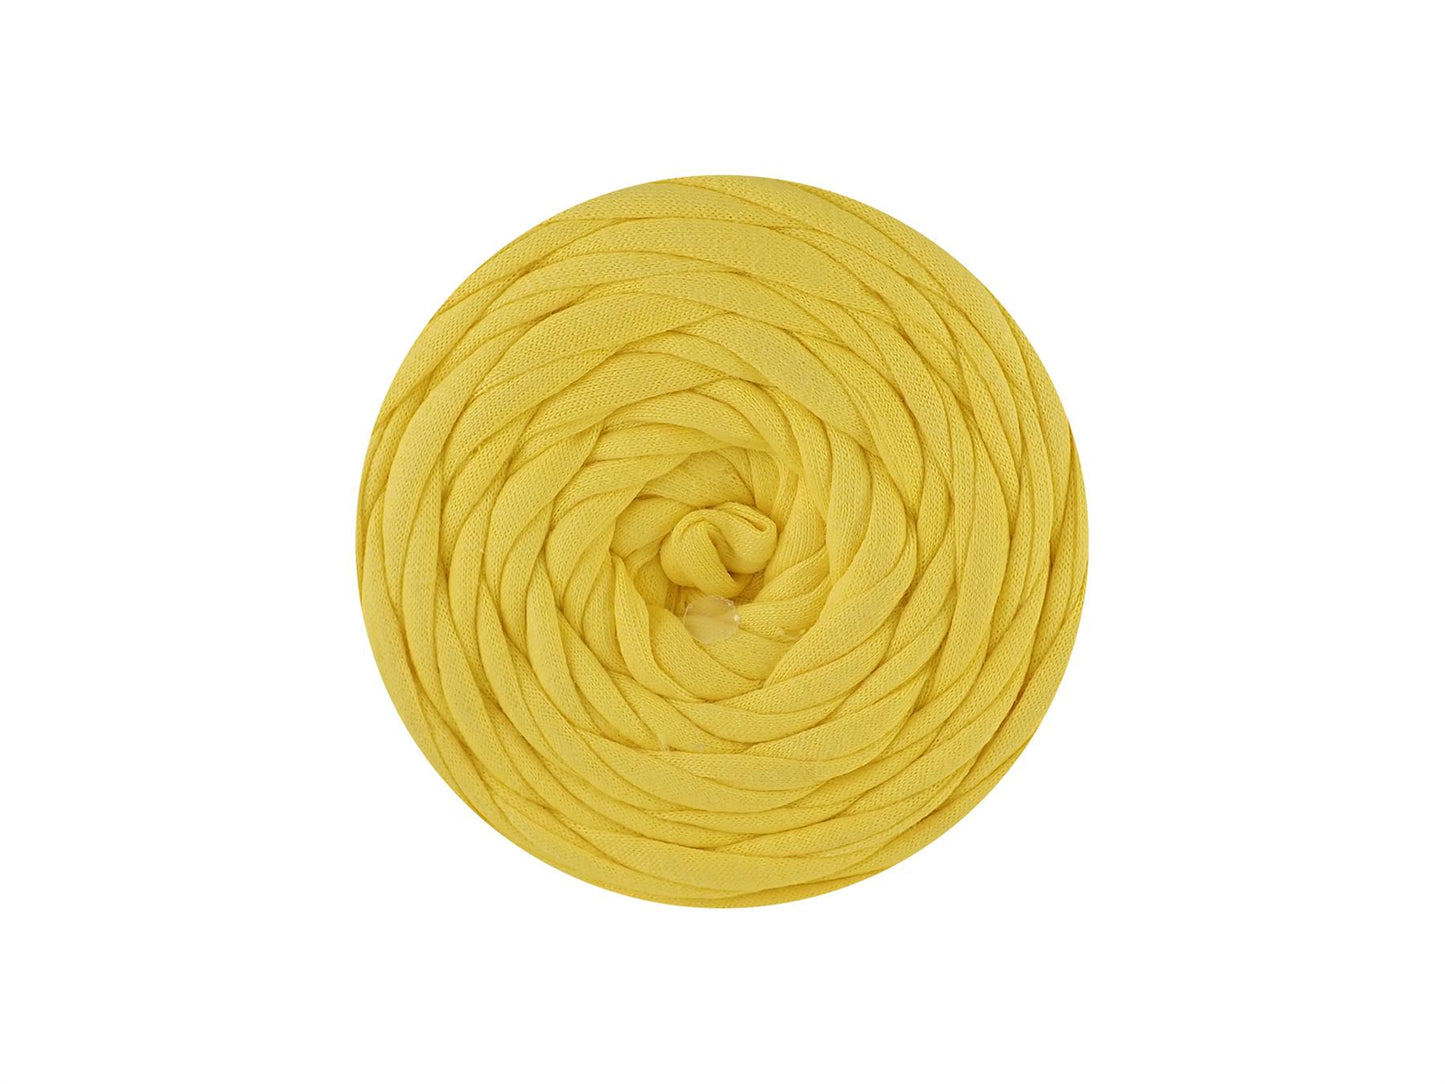 Hoooked Zpagetti Sunflower Yellow Cotton T-Shirt Yarn - 60M 350g